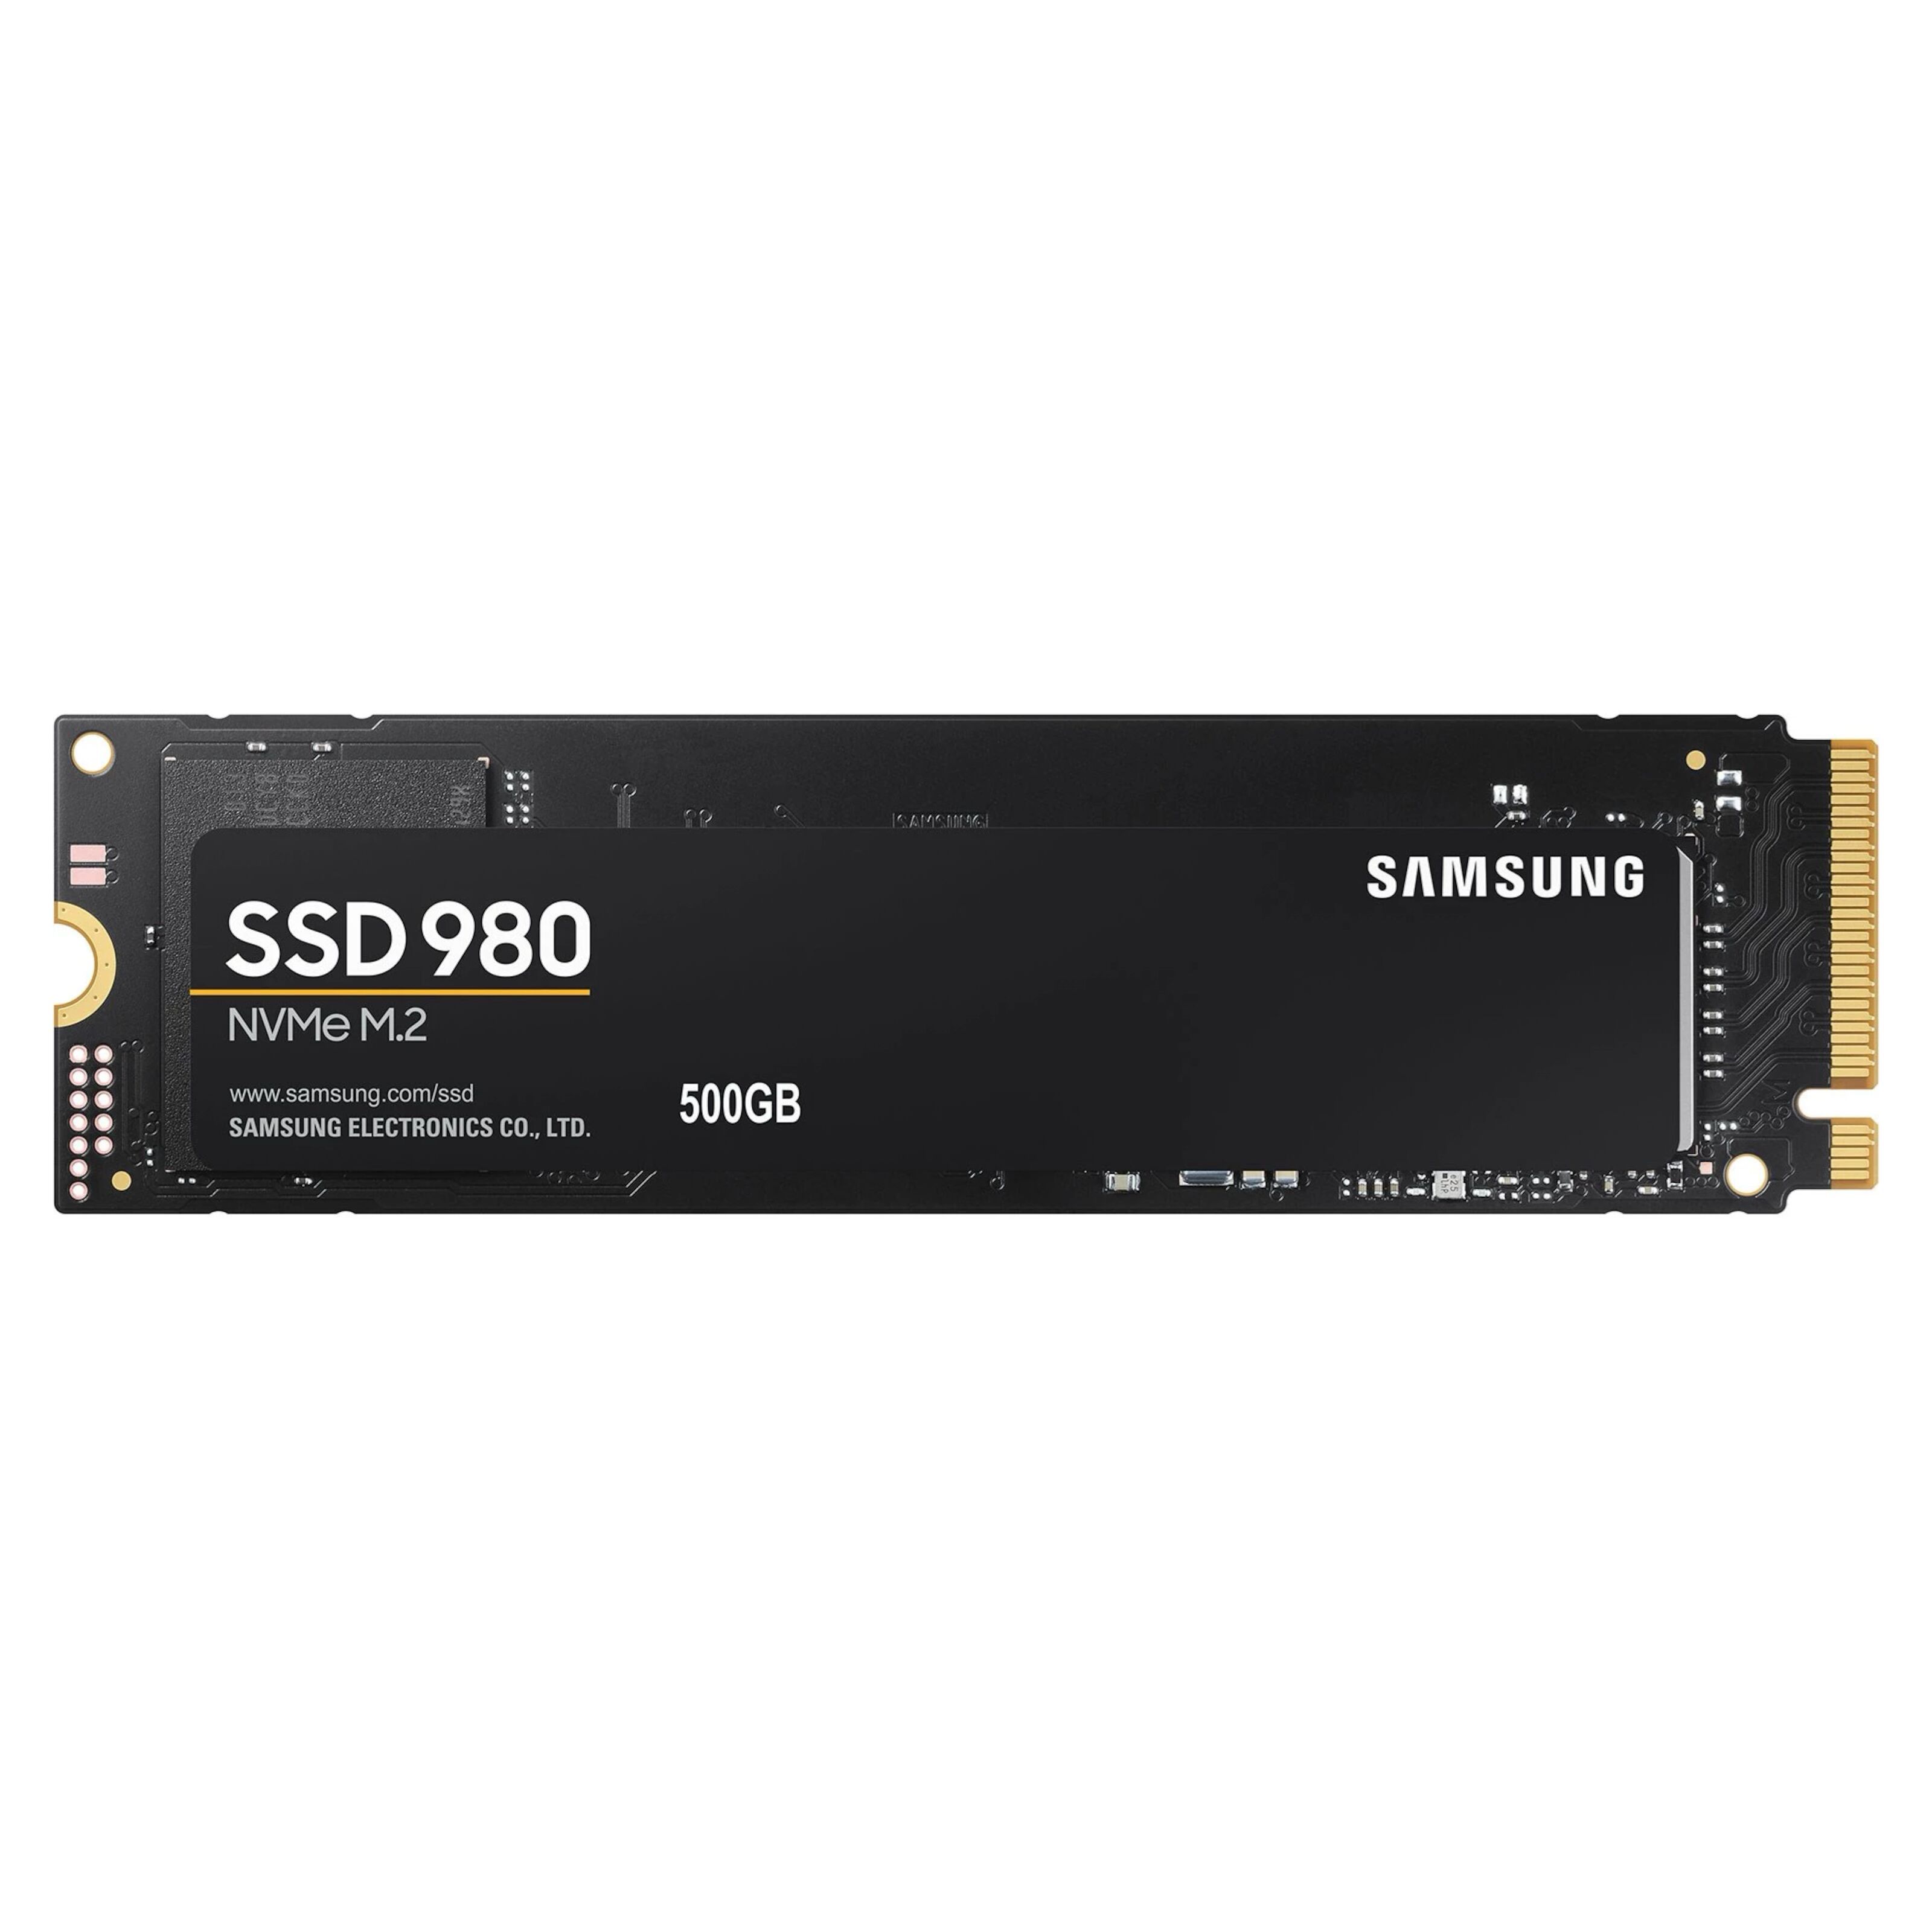 Samsung 980 M.2 NVMe SSD - SSD | Kjell.com